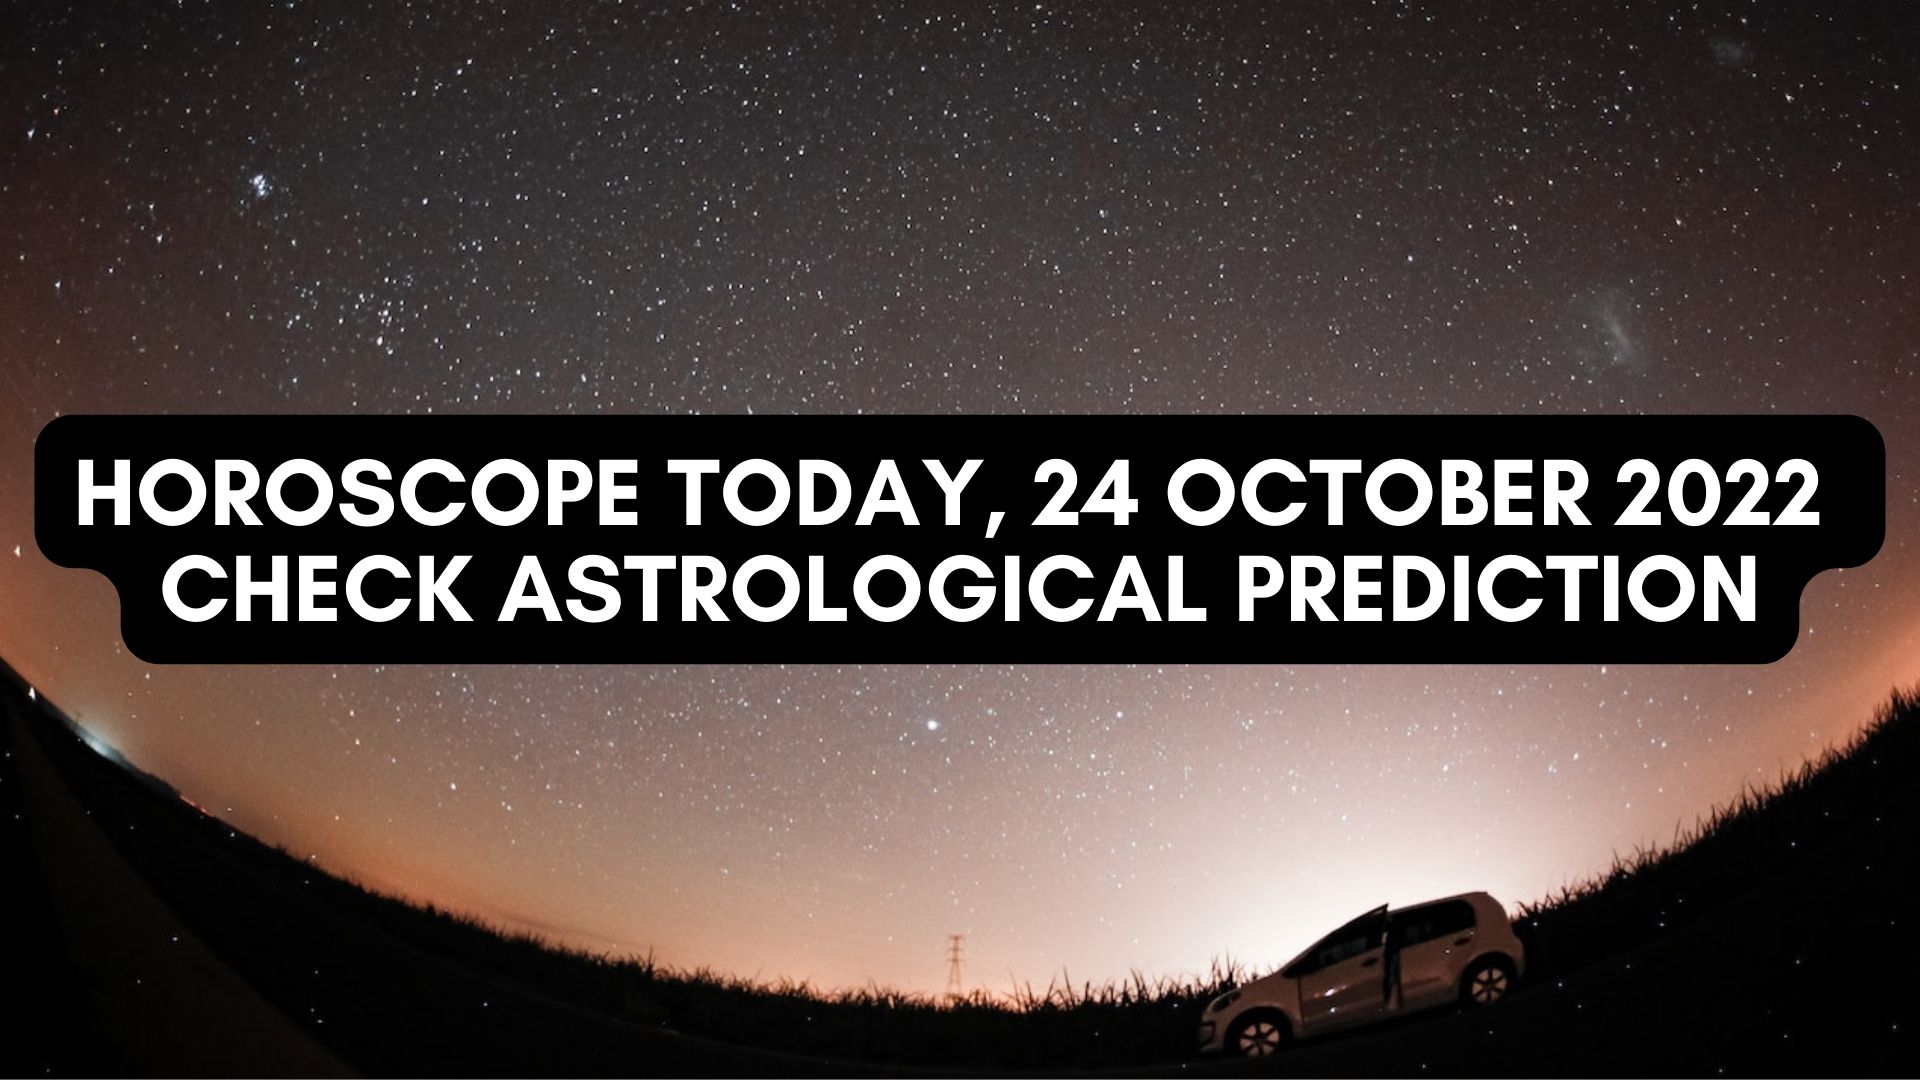 Horoscope Today, 24 October 2022 - Check Astrological Prediction